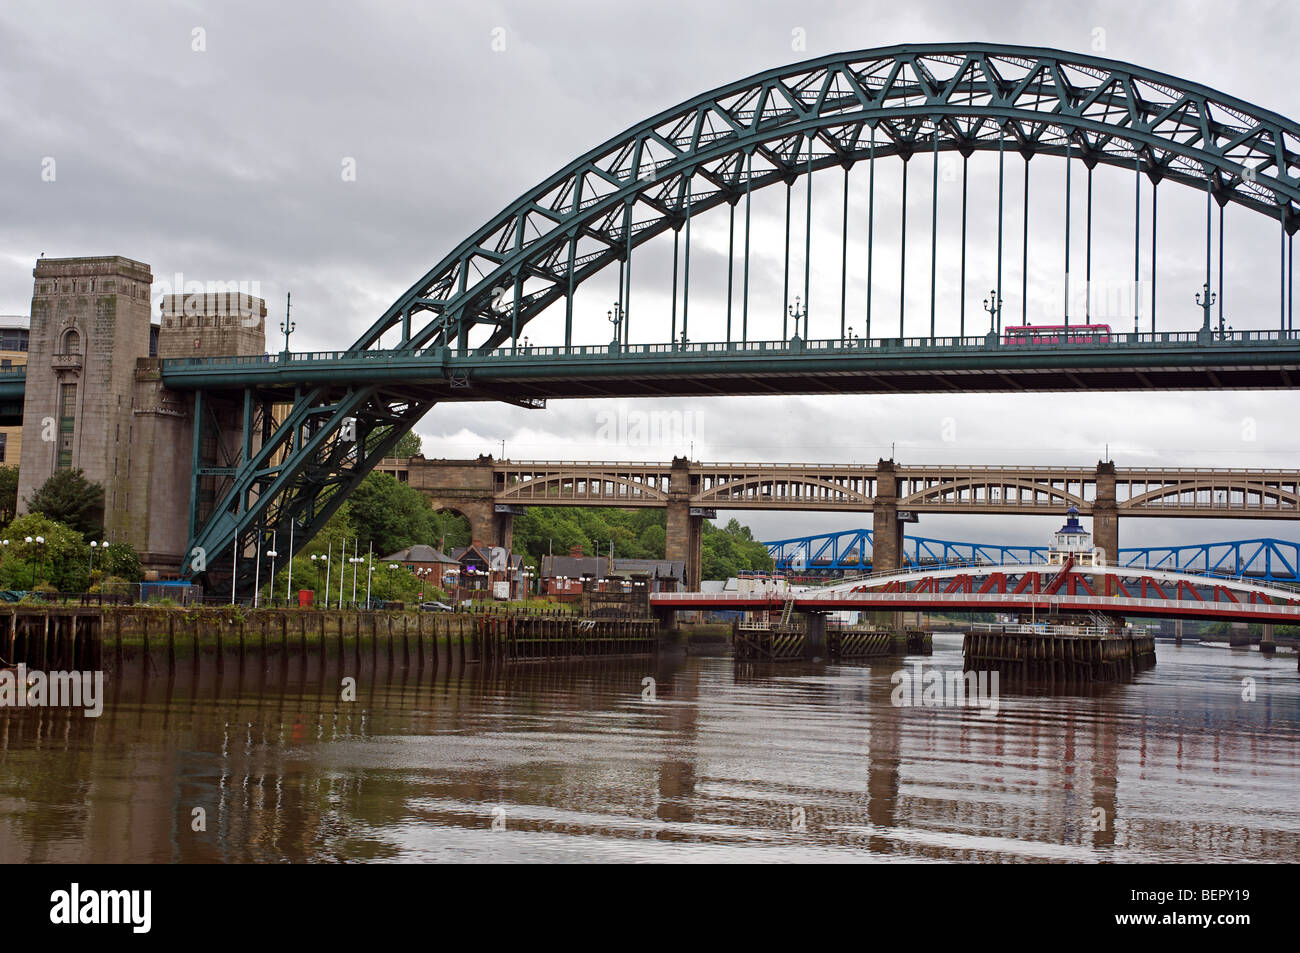 Tyne Bridge, Newcastle upon Tyne, au Royaume-Uni. Banque D'Images